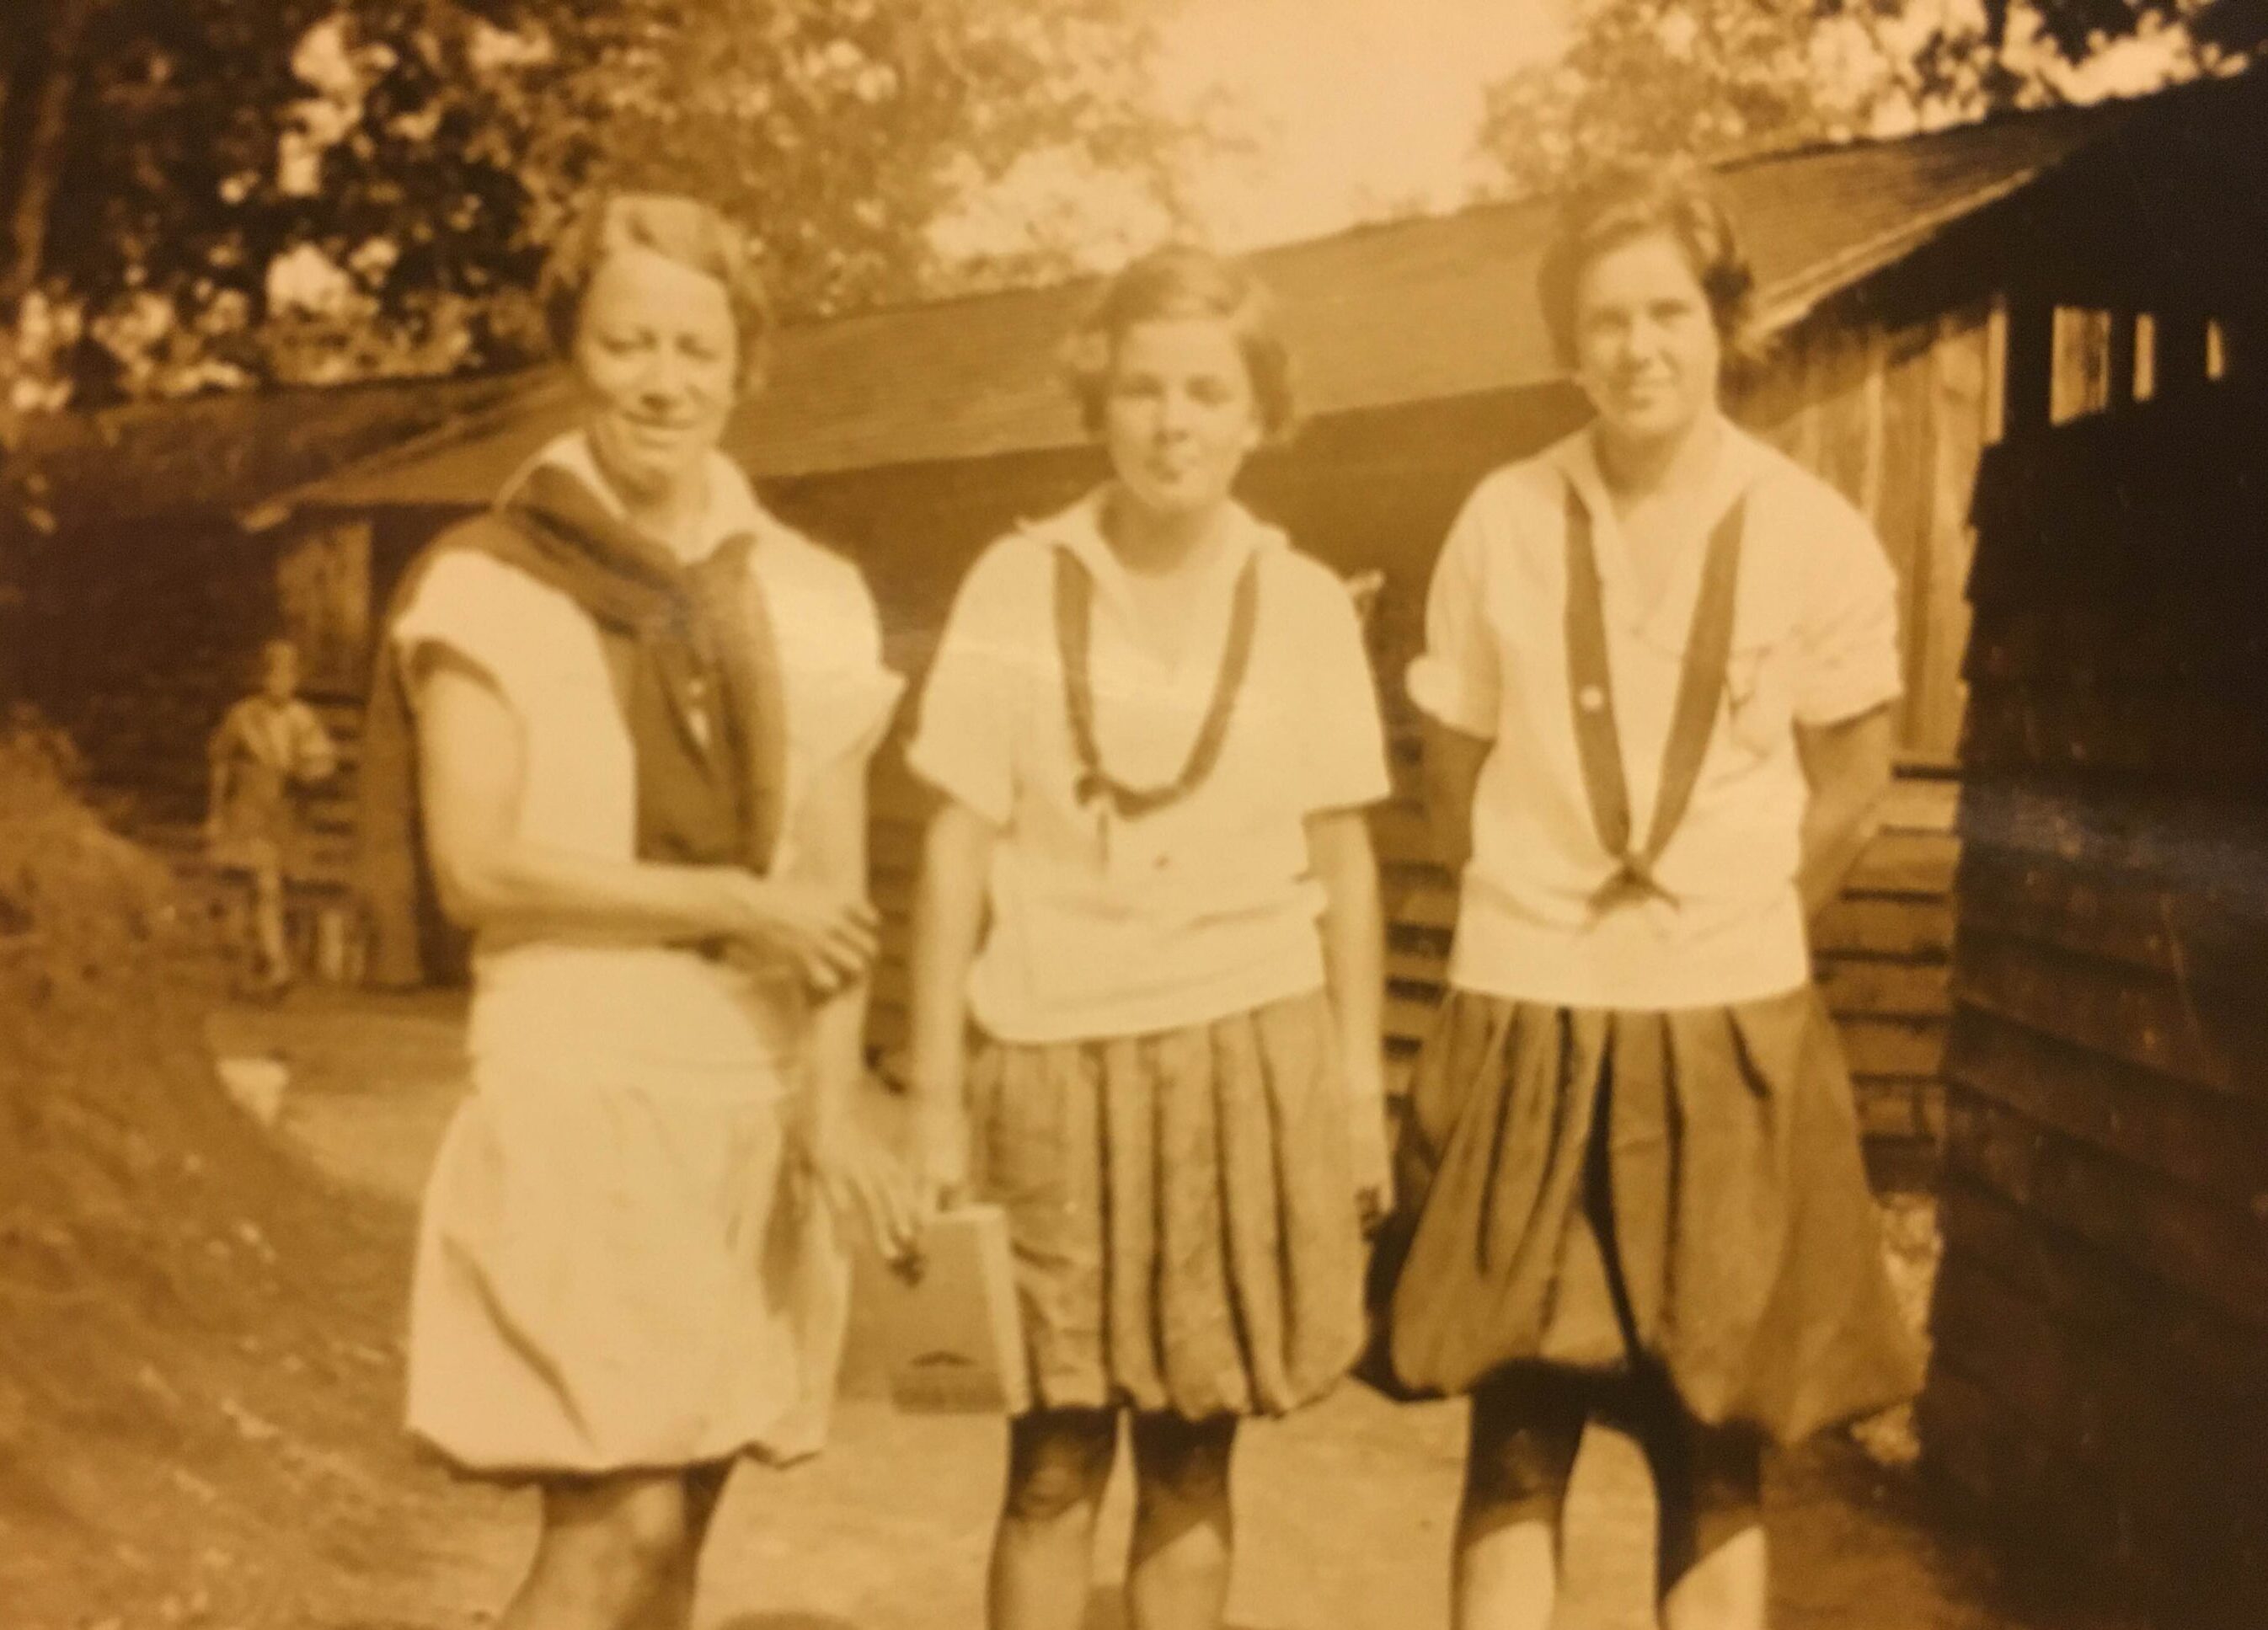 historic girls camp uniforms